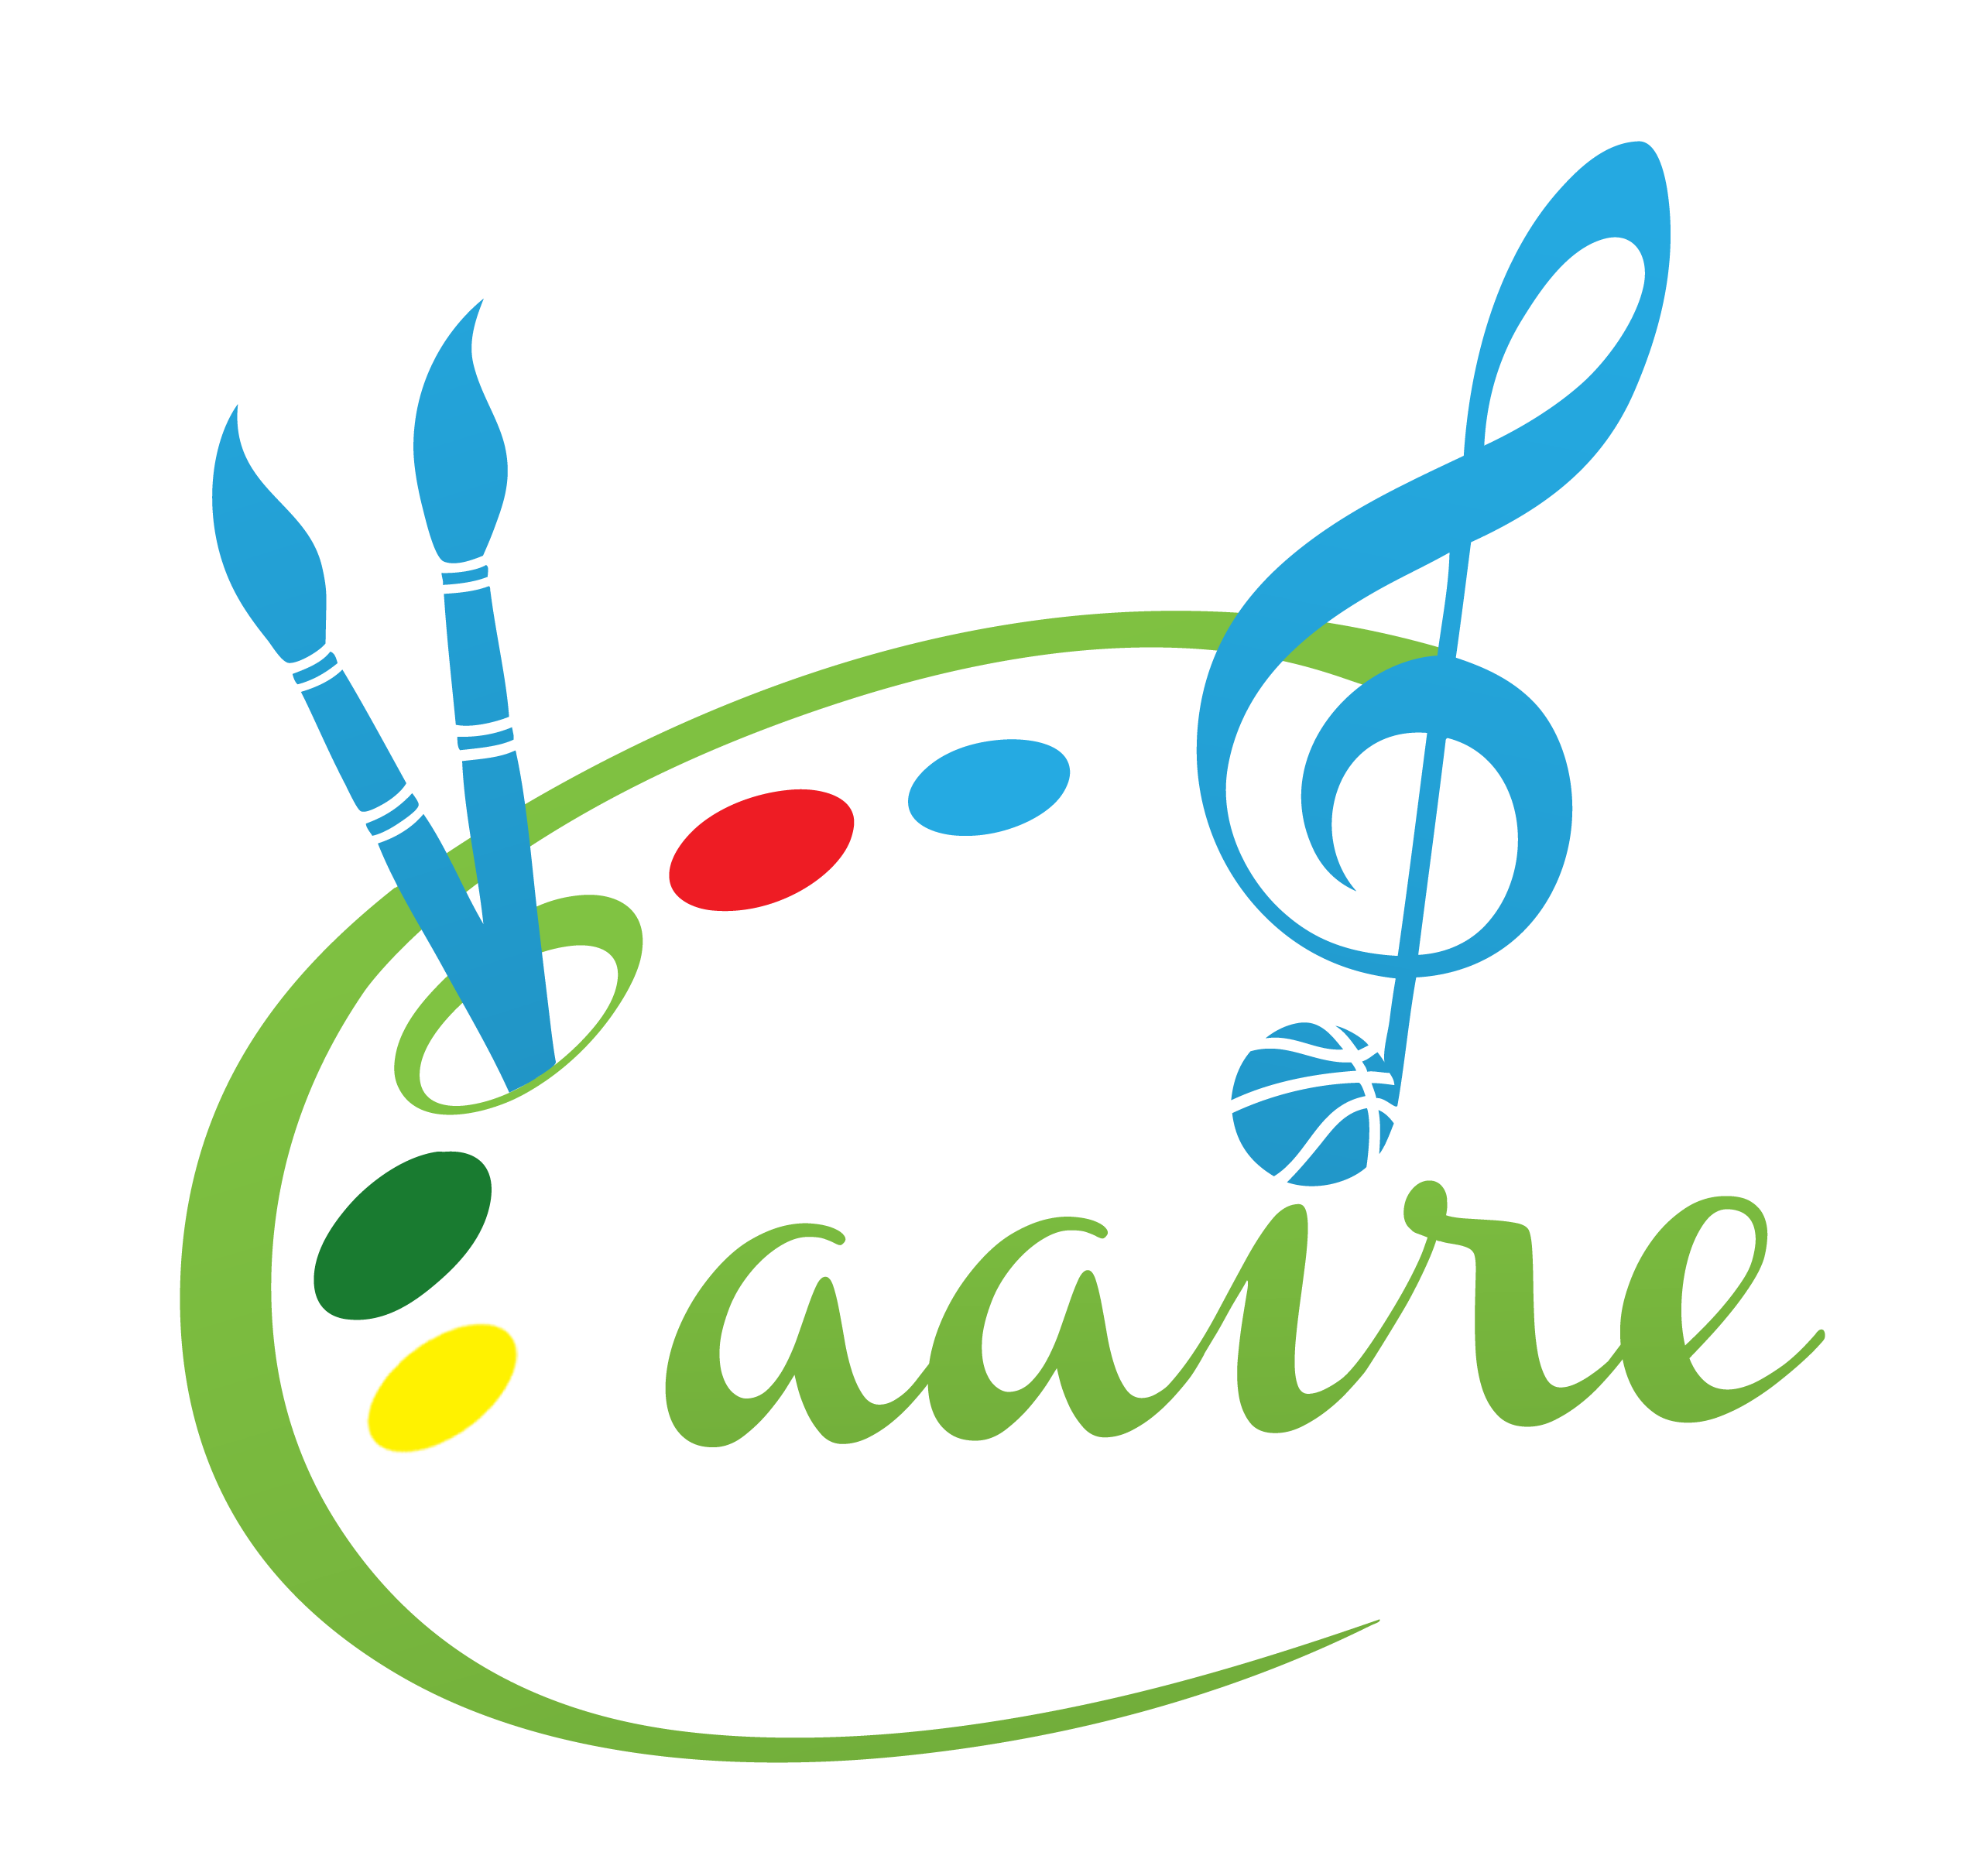 CAAIRE logo